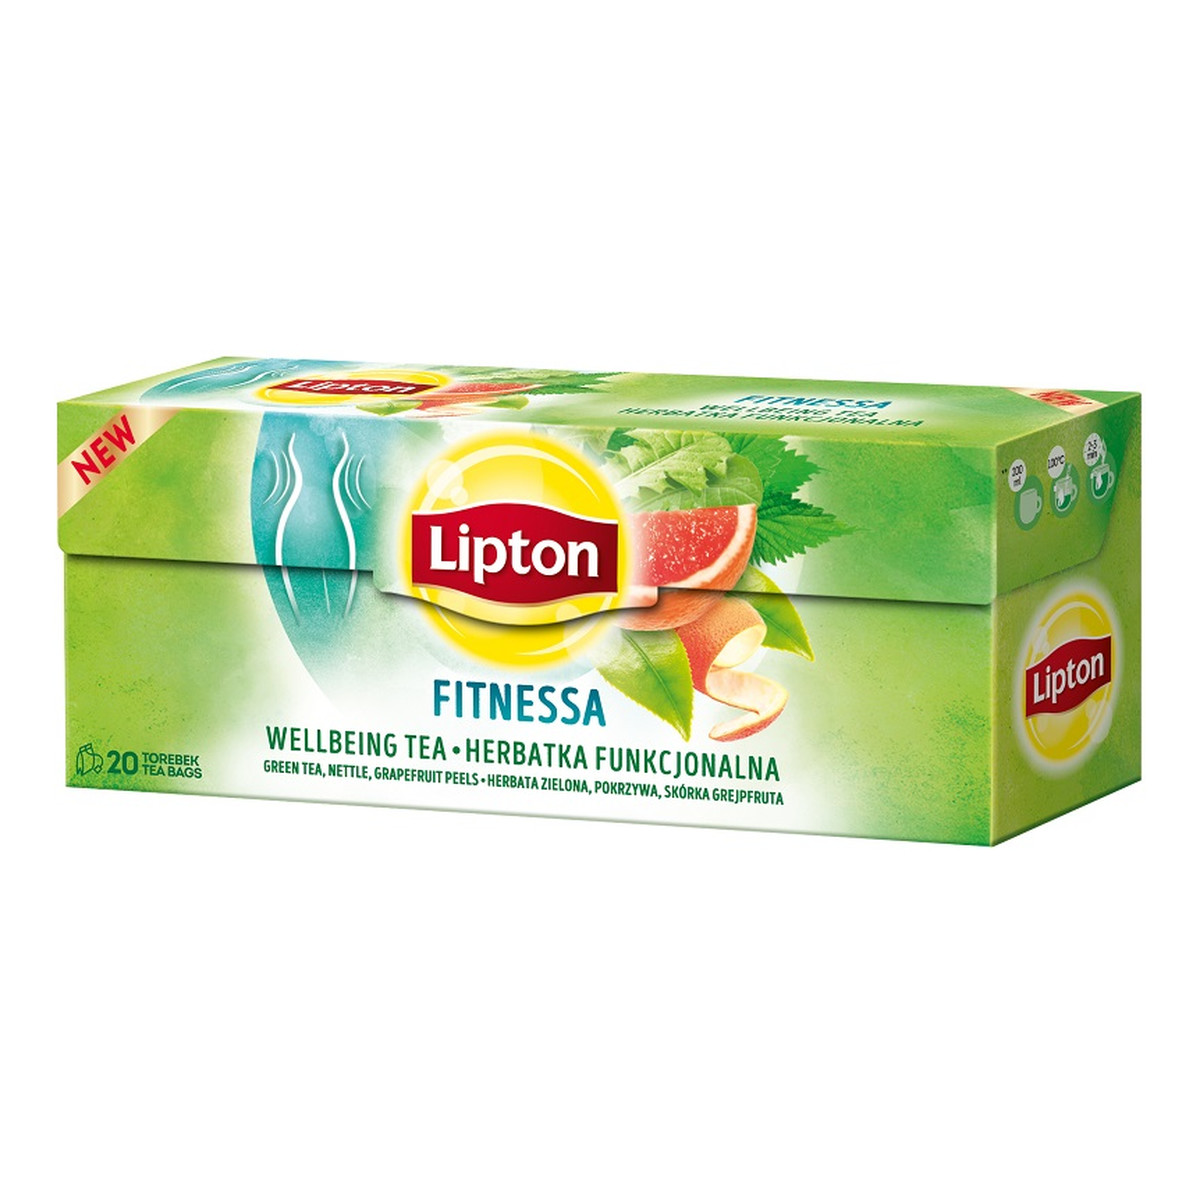 Lipton Fitnessa Herbata funkcjonalna 20 torebek 32g